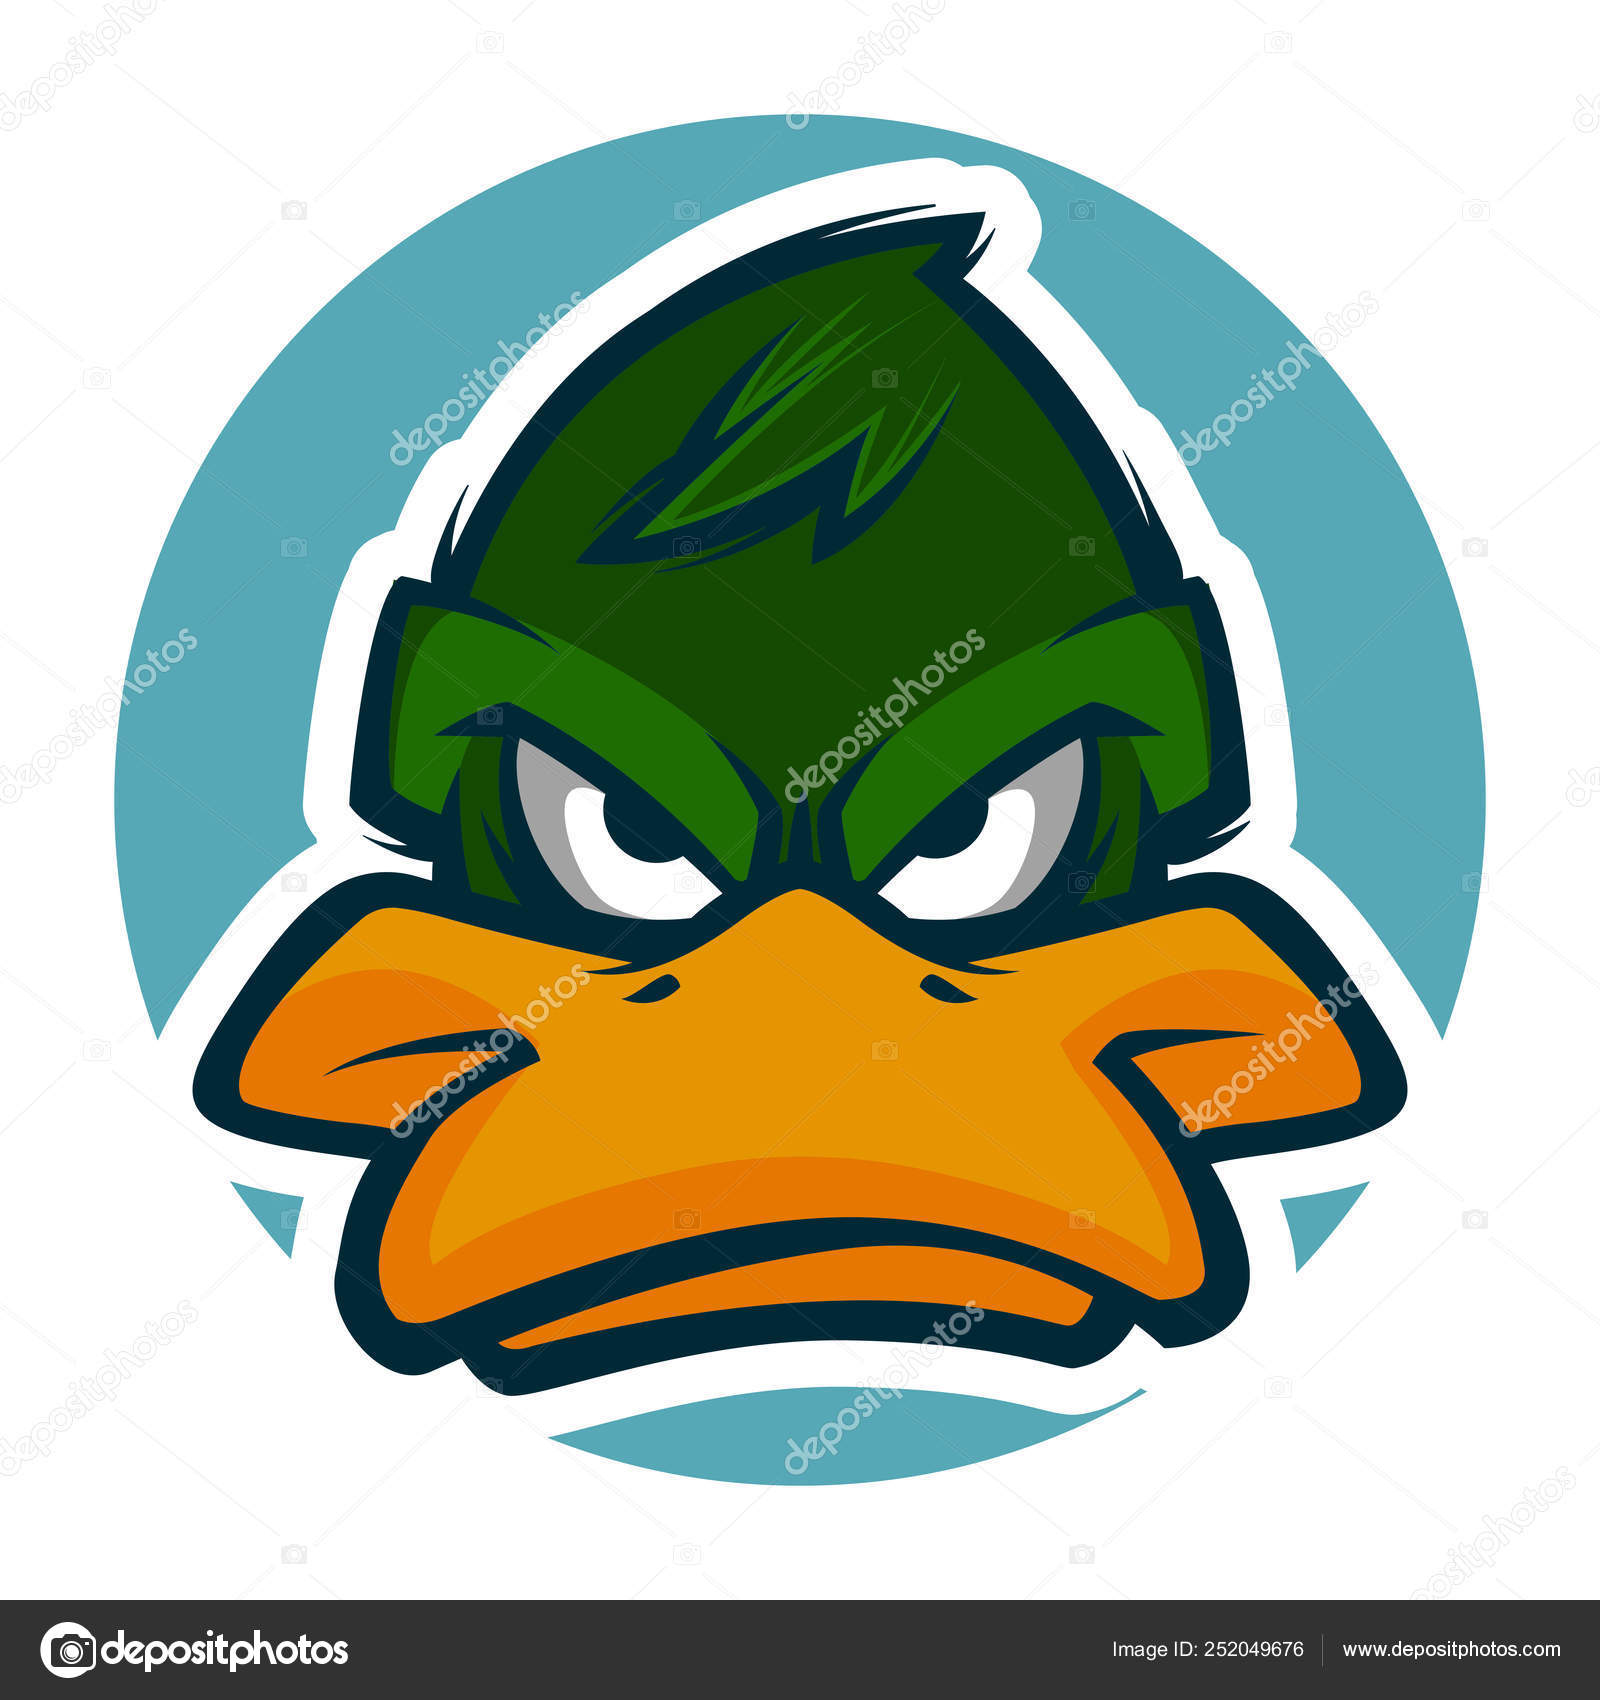 https://st4.depositphotos.com/21199224/25204/v/1600/depositphotos_252049676-stock-illustration-angry-duck-head-illustration-mascot.jpg